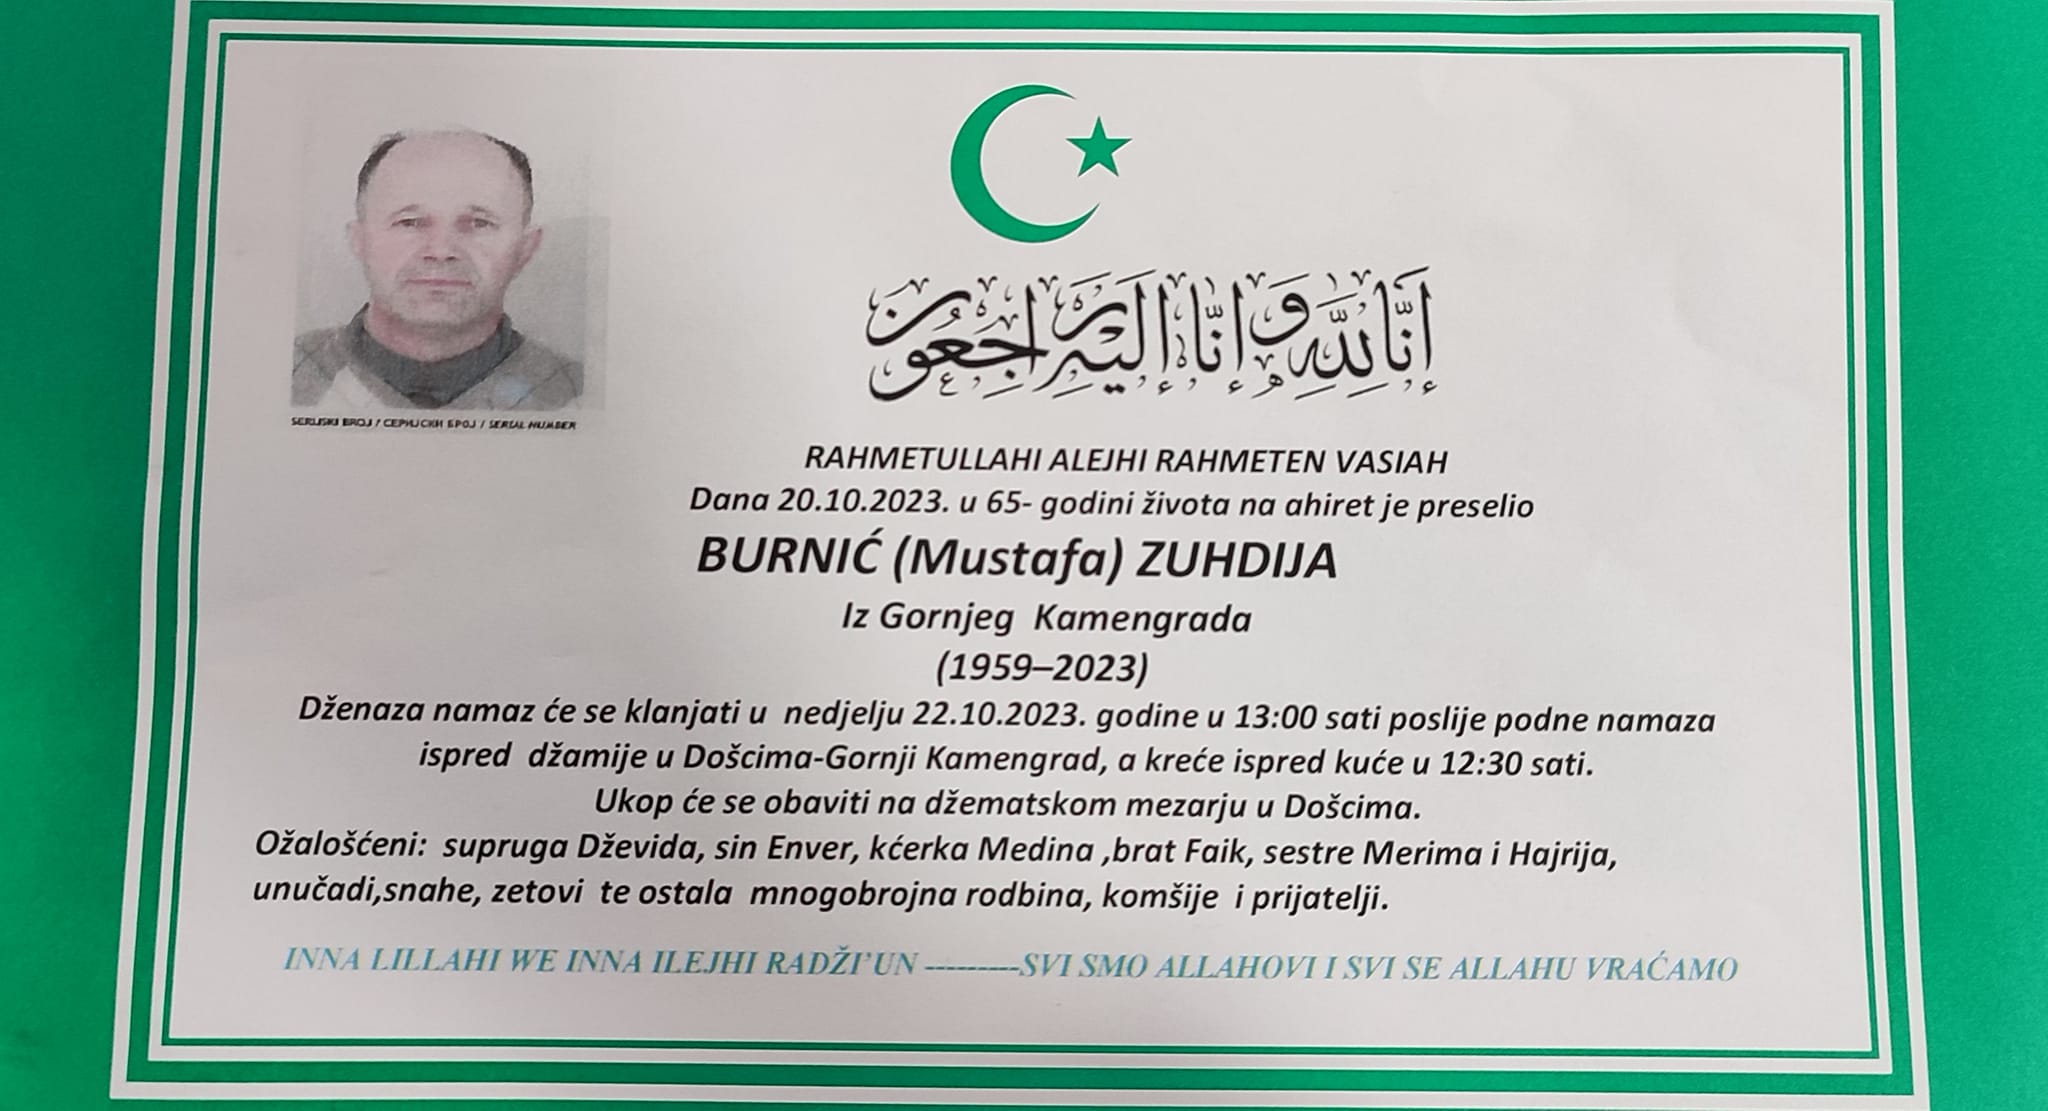 Burnić (Mustafa) Zuhdija